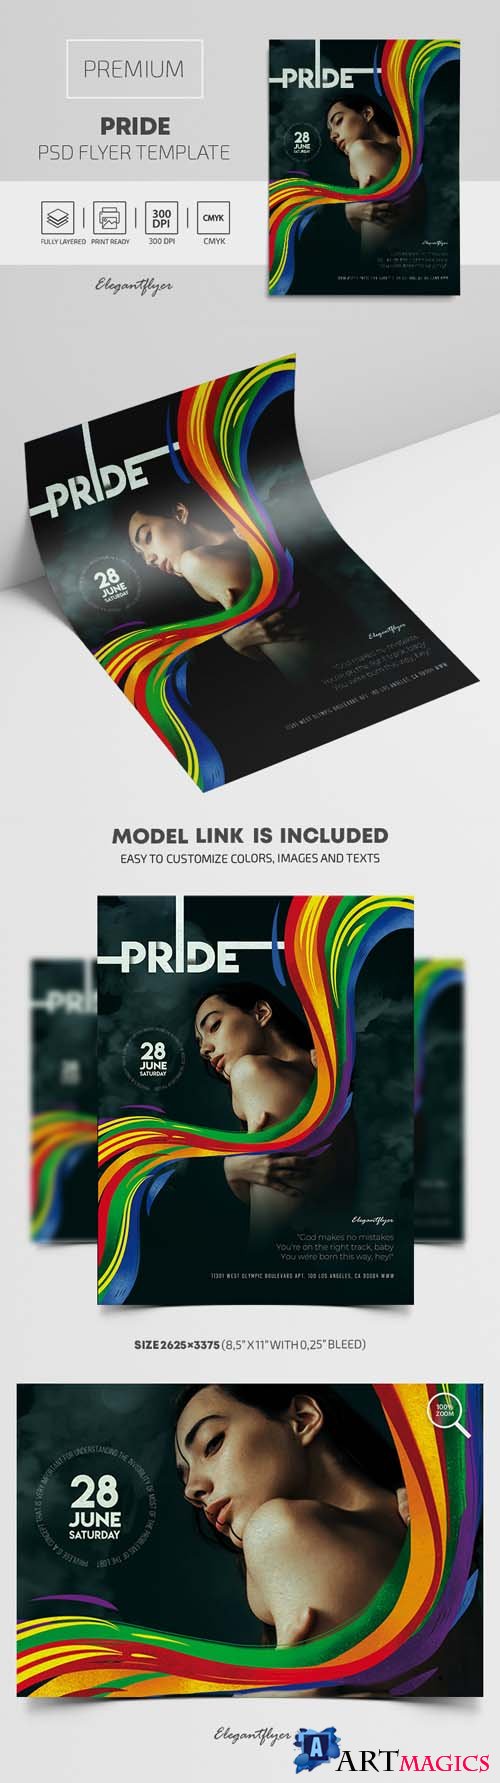 Pride Party Premium PSD Flyer Template